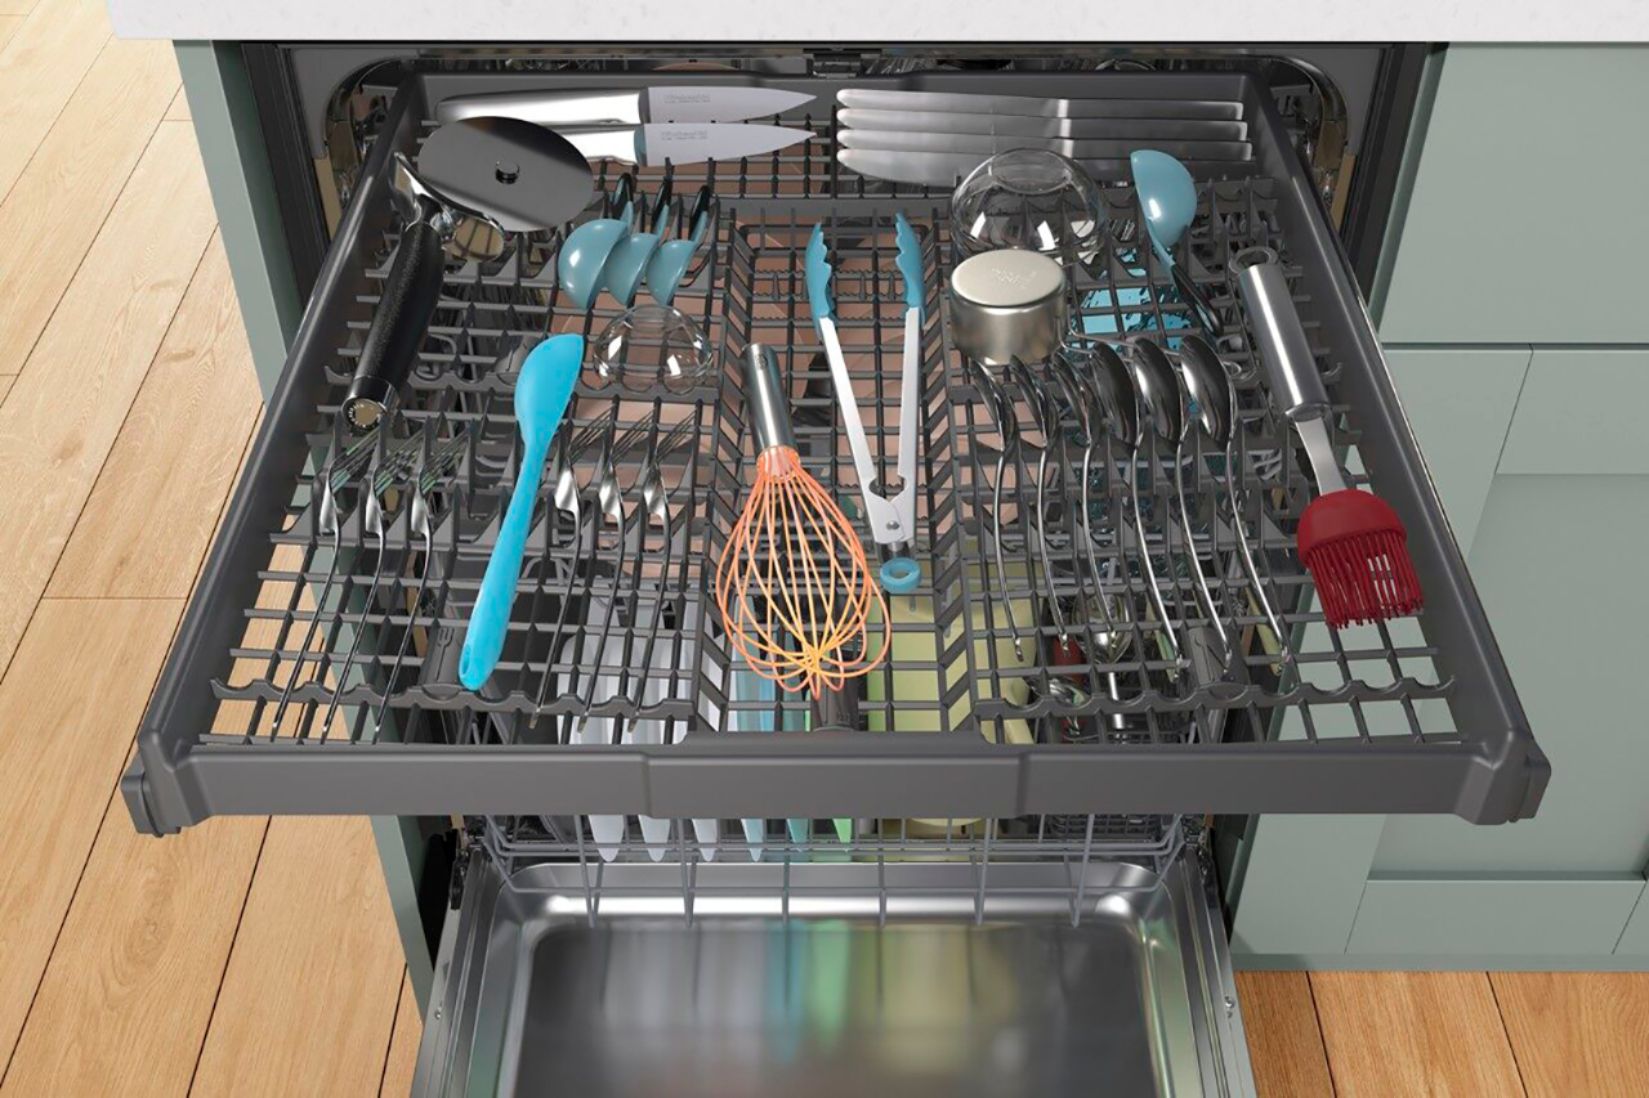 Large Capacity Dishwasher with 3rd Rack